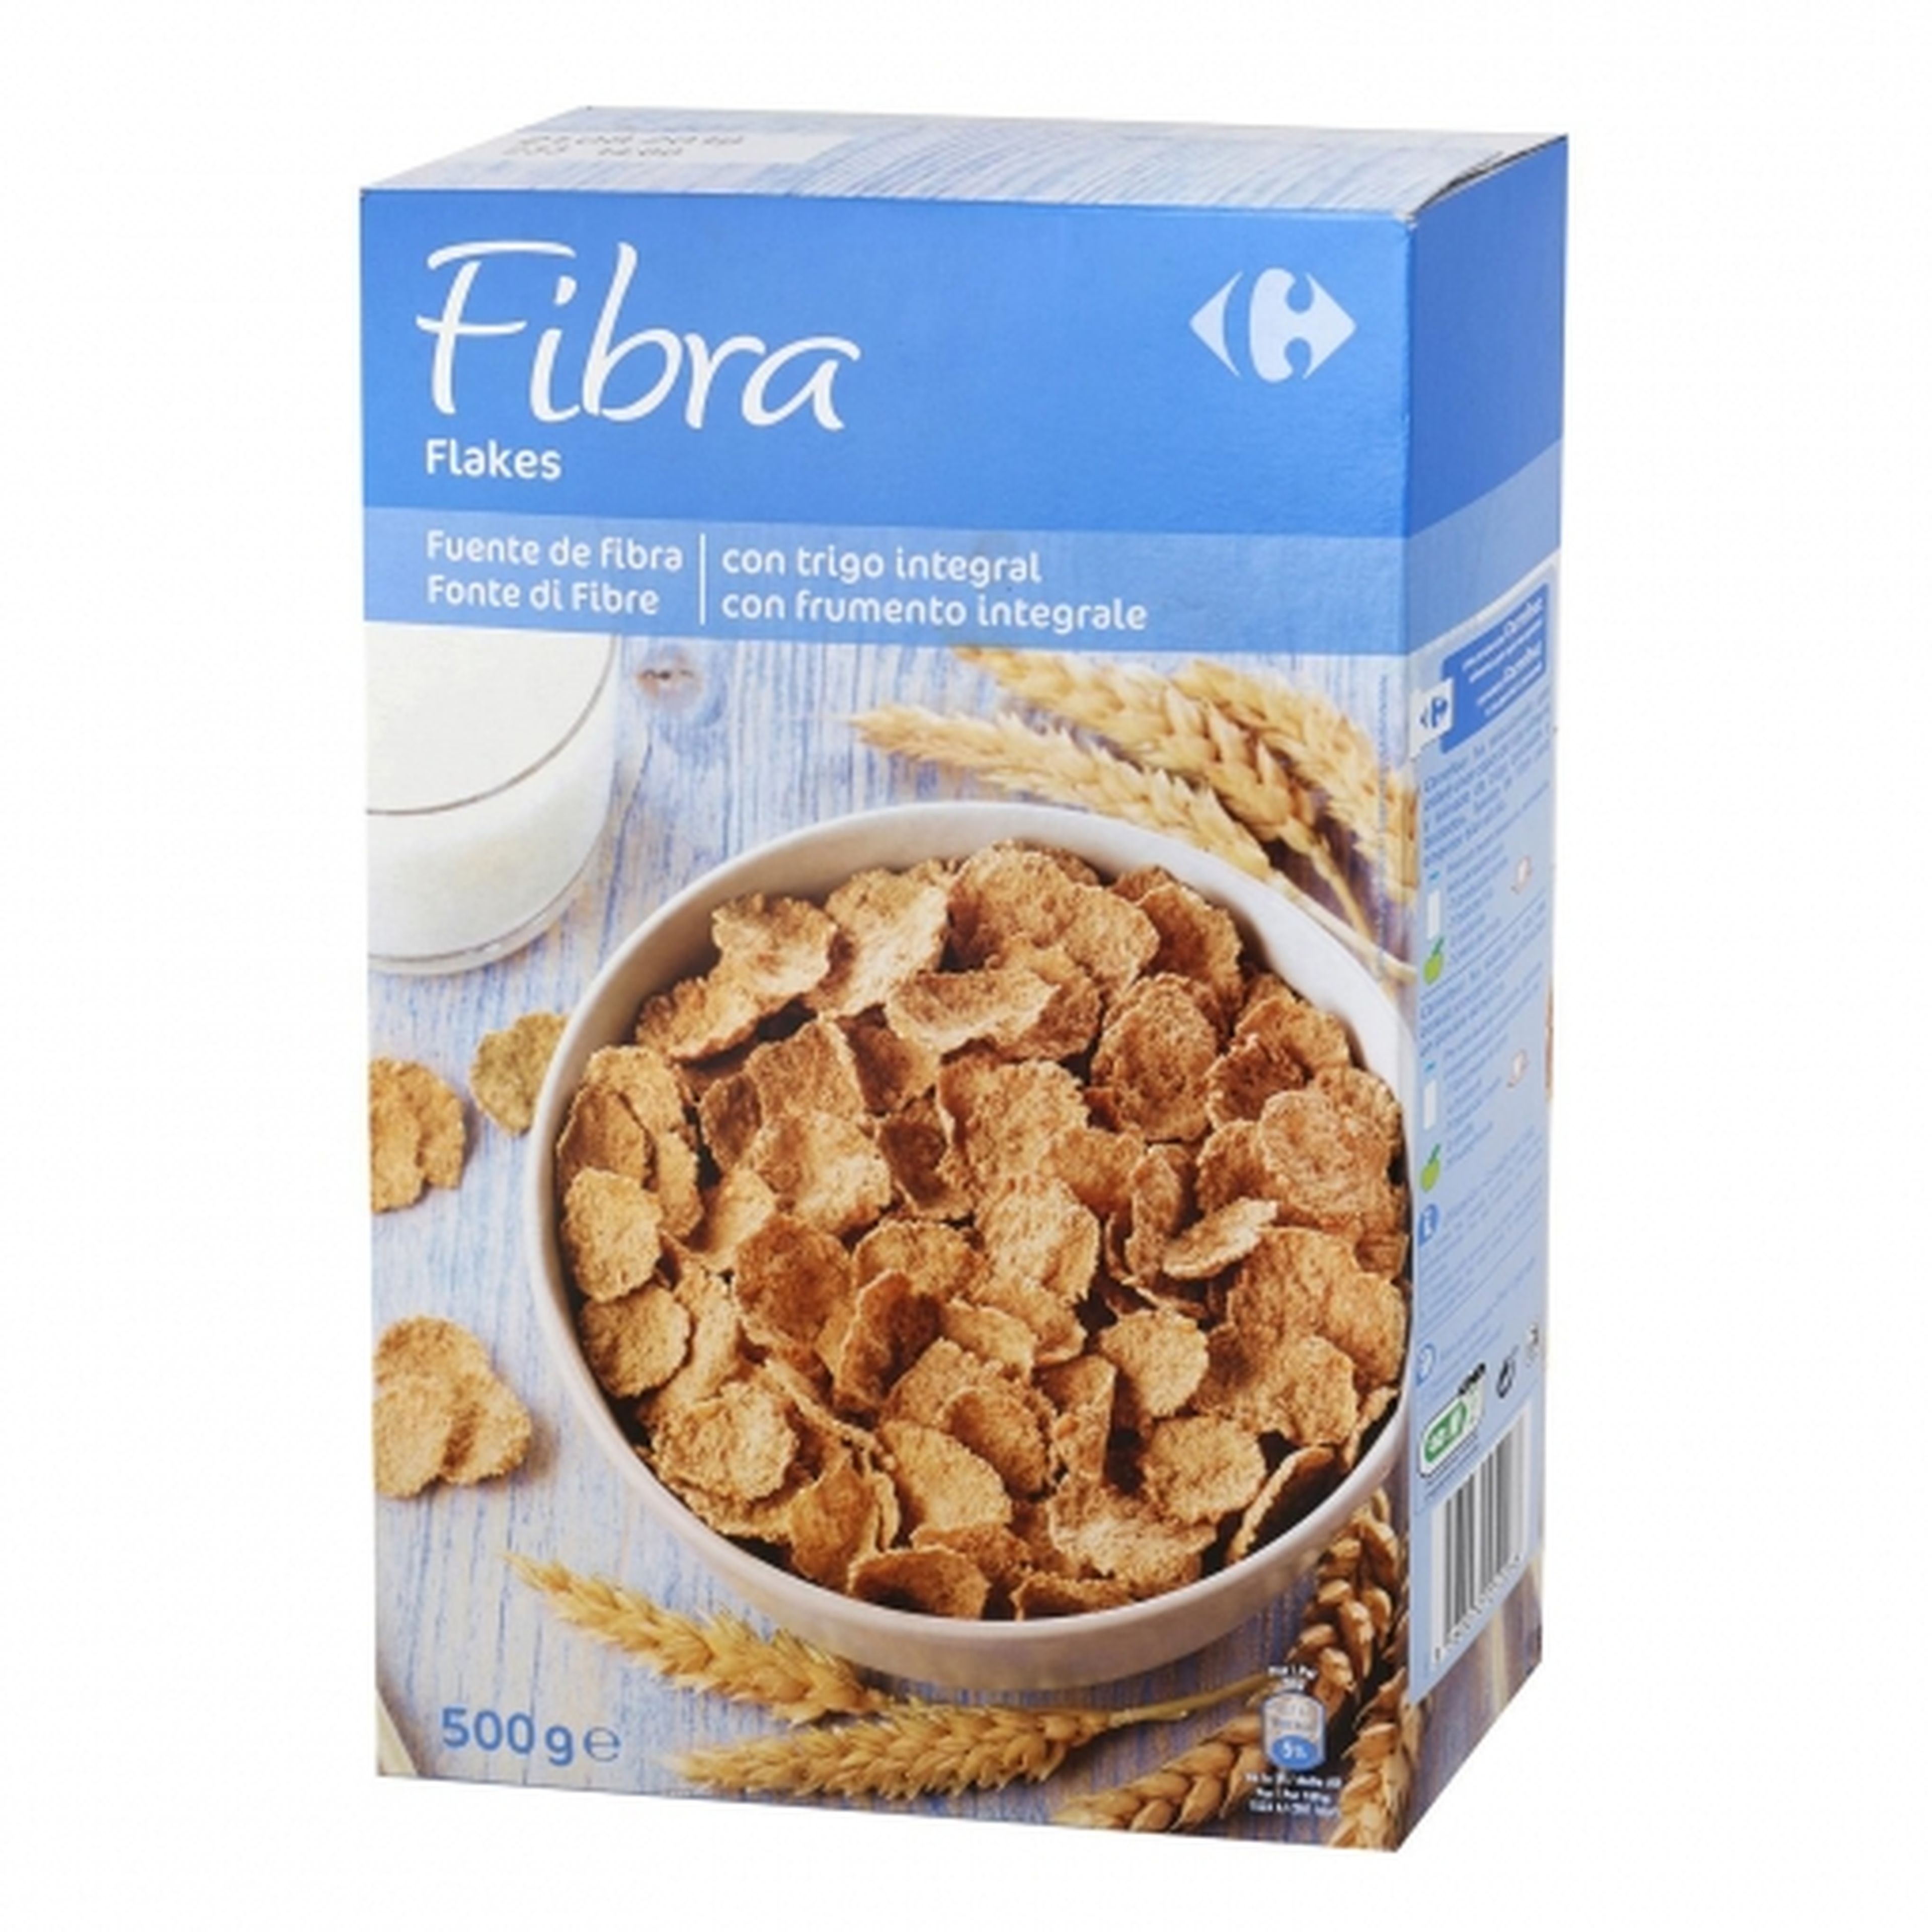 Cereales integrales de Carrefour